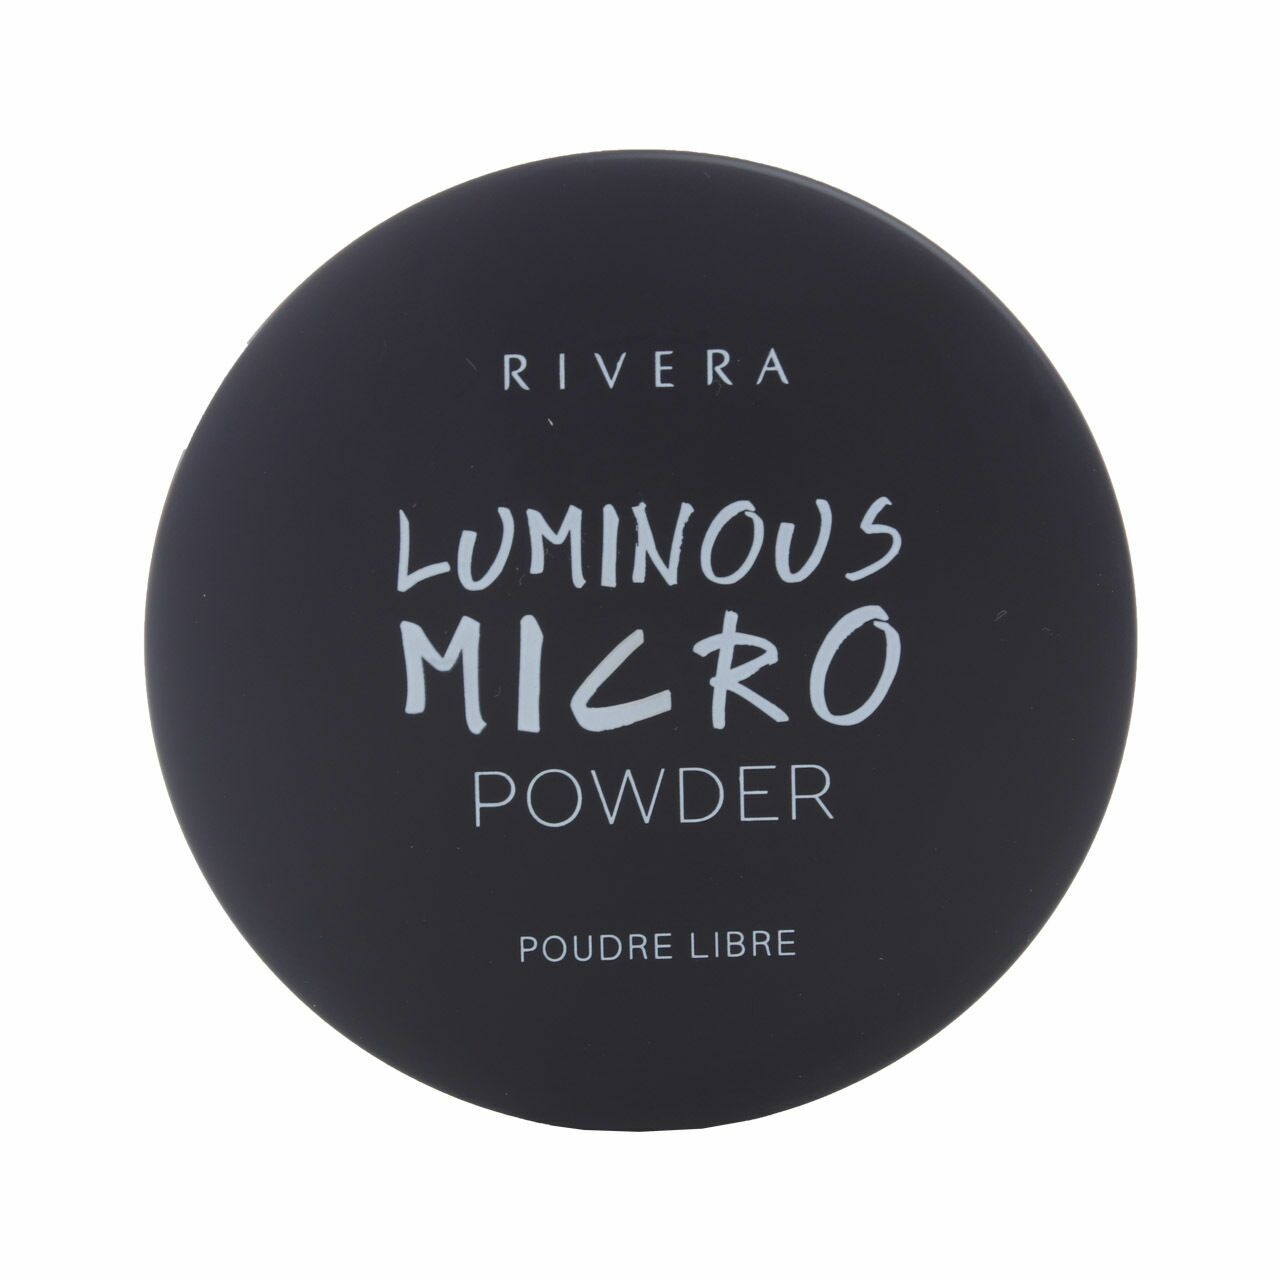 Rivera Luminous Micro Powder 02 Natural Faces